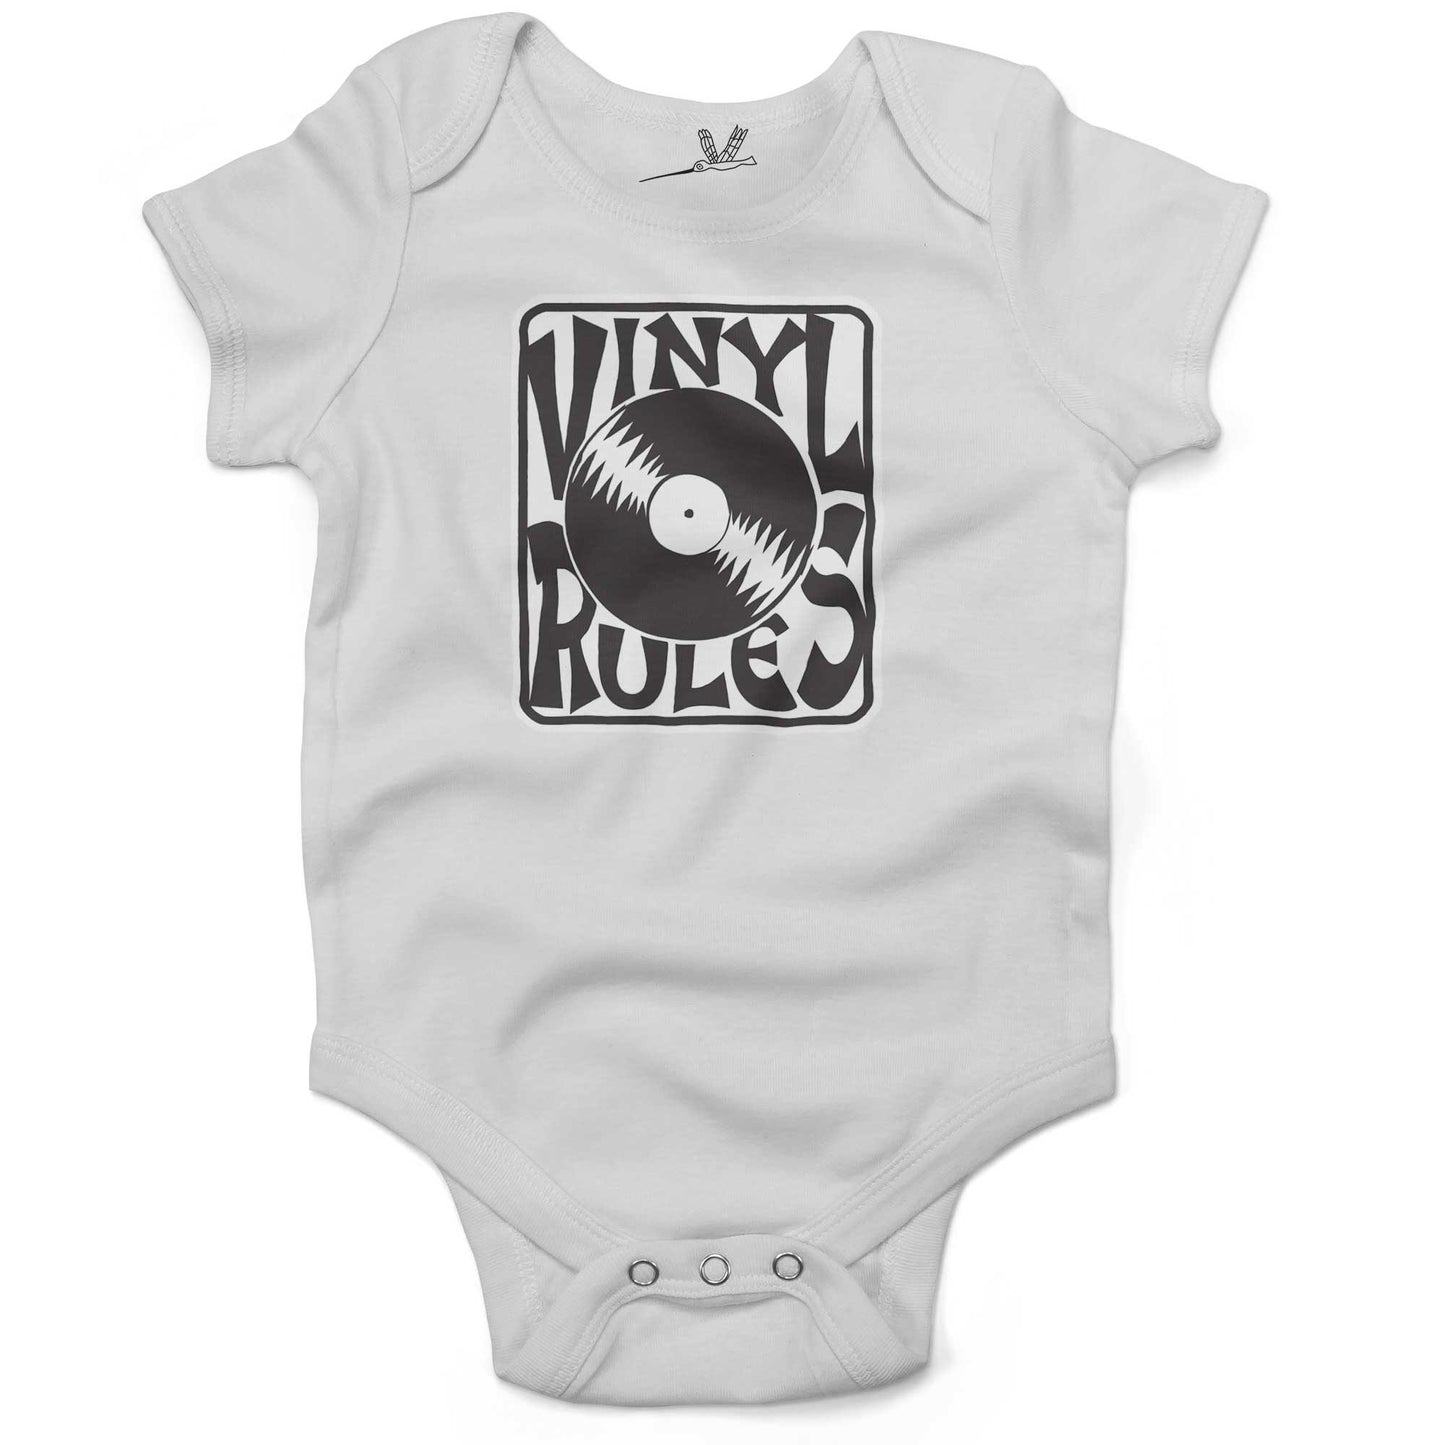 Vinyl Rules Baby One Piece or Raglan Tee-White-3-6 months